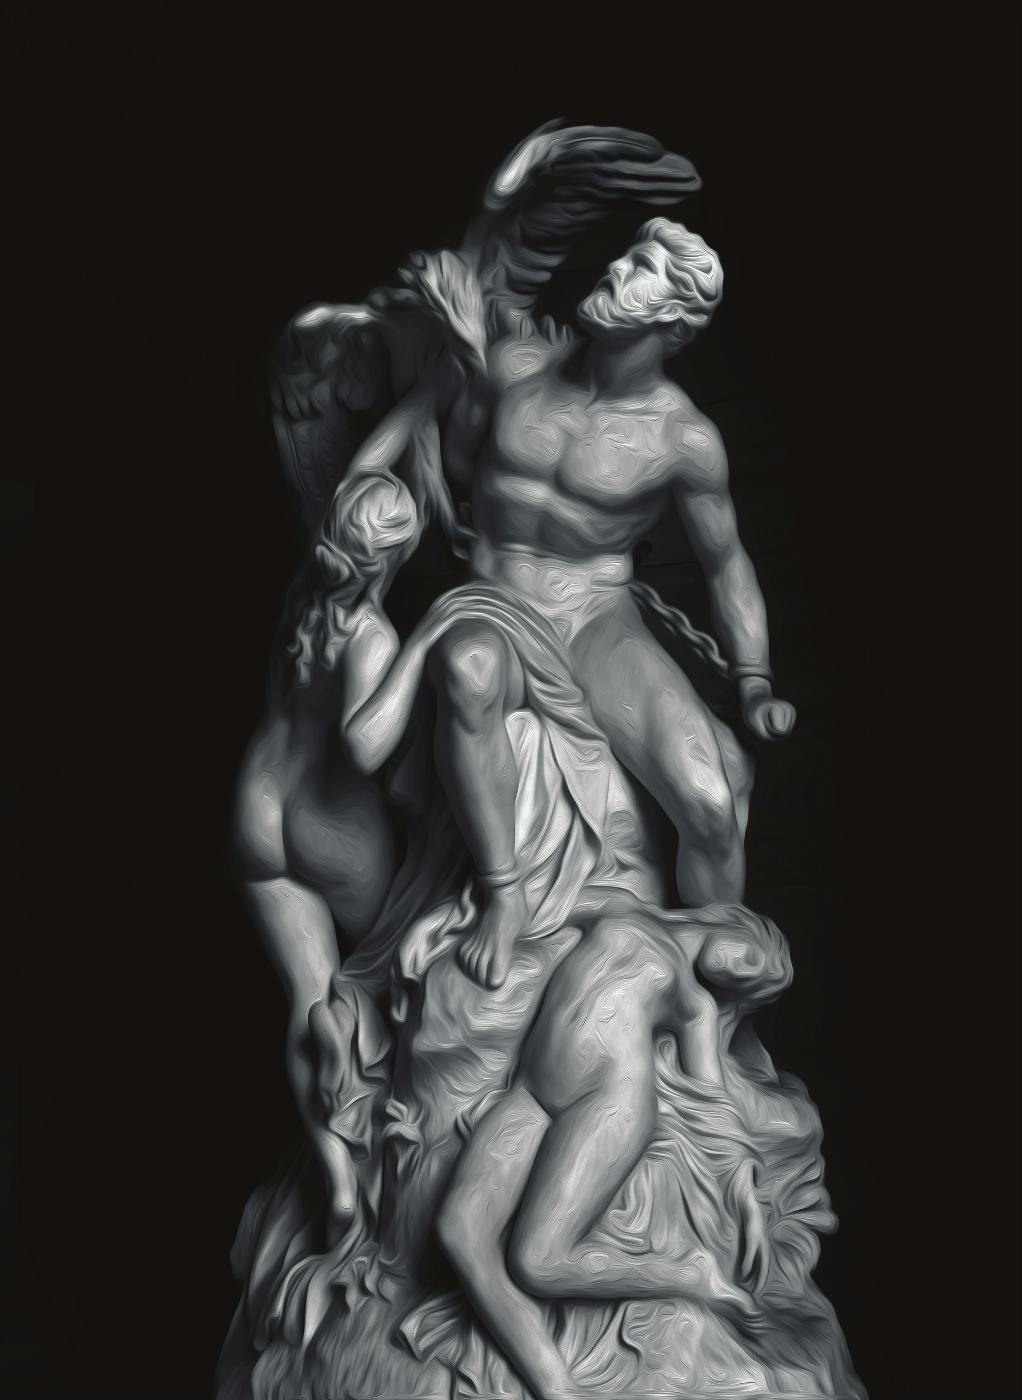 A statue of Prometheus